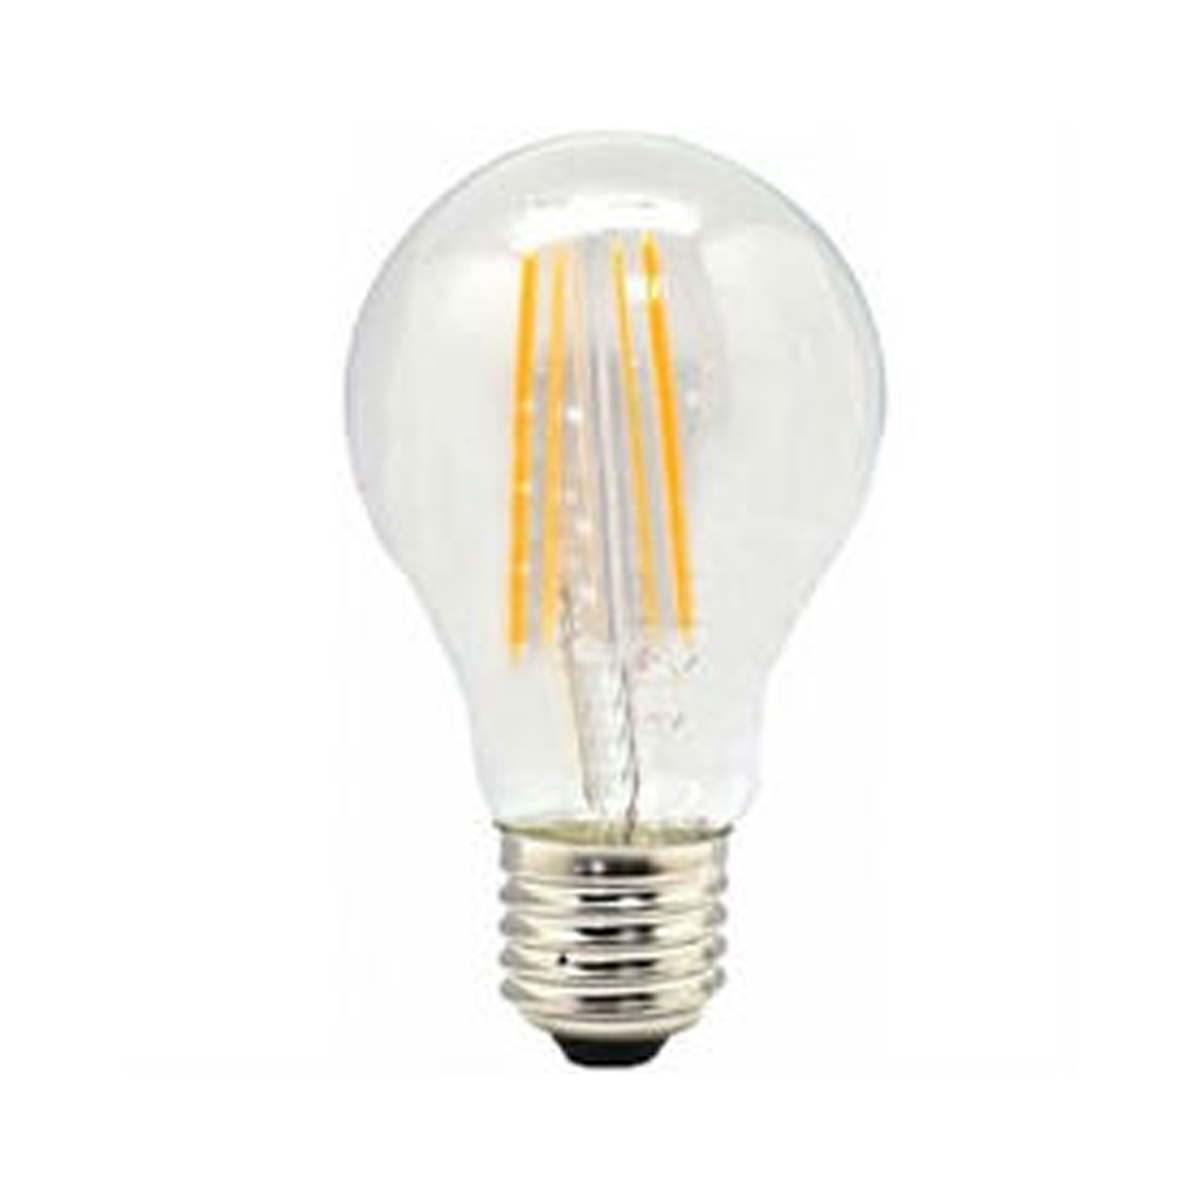 WORK'S Filament A60F-LB0630-E27 ЛАМПА LED